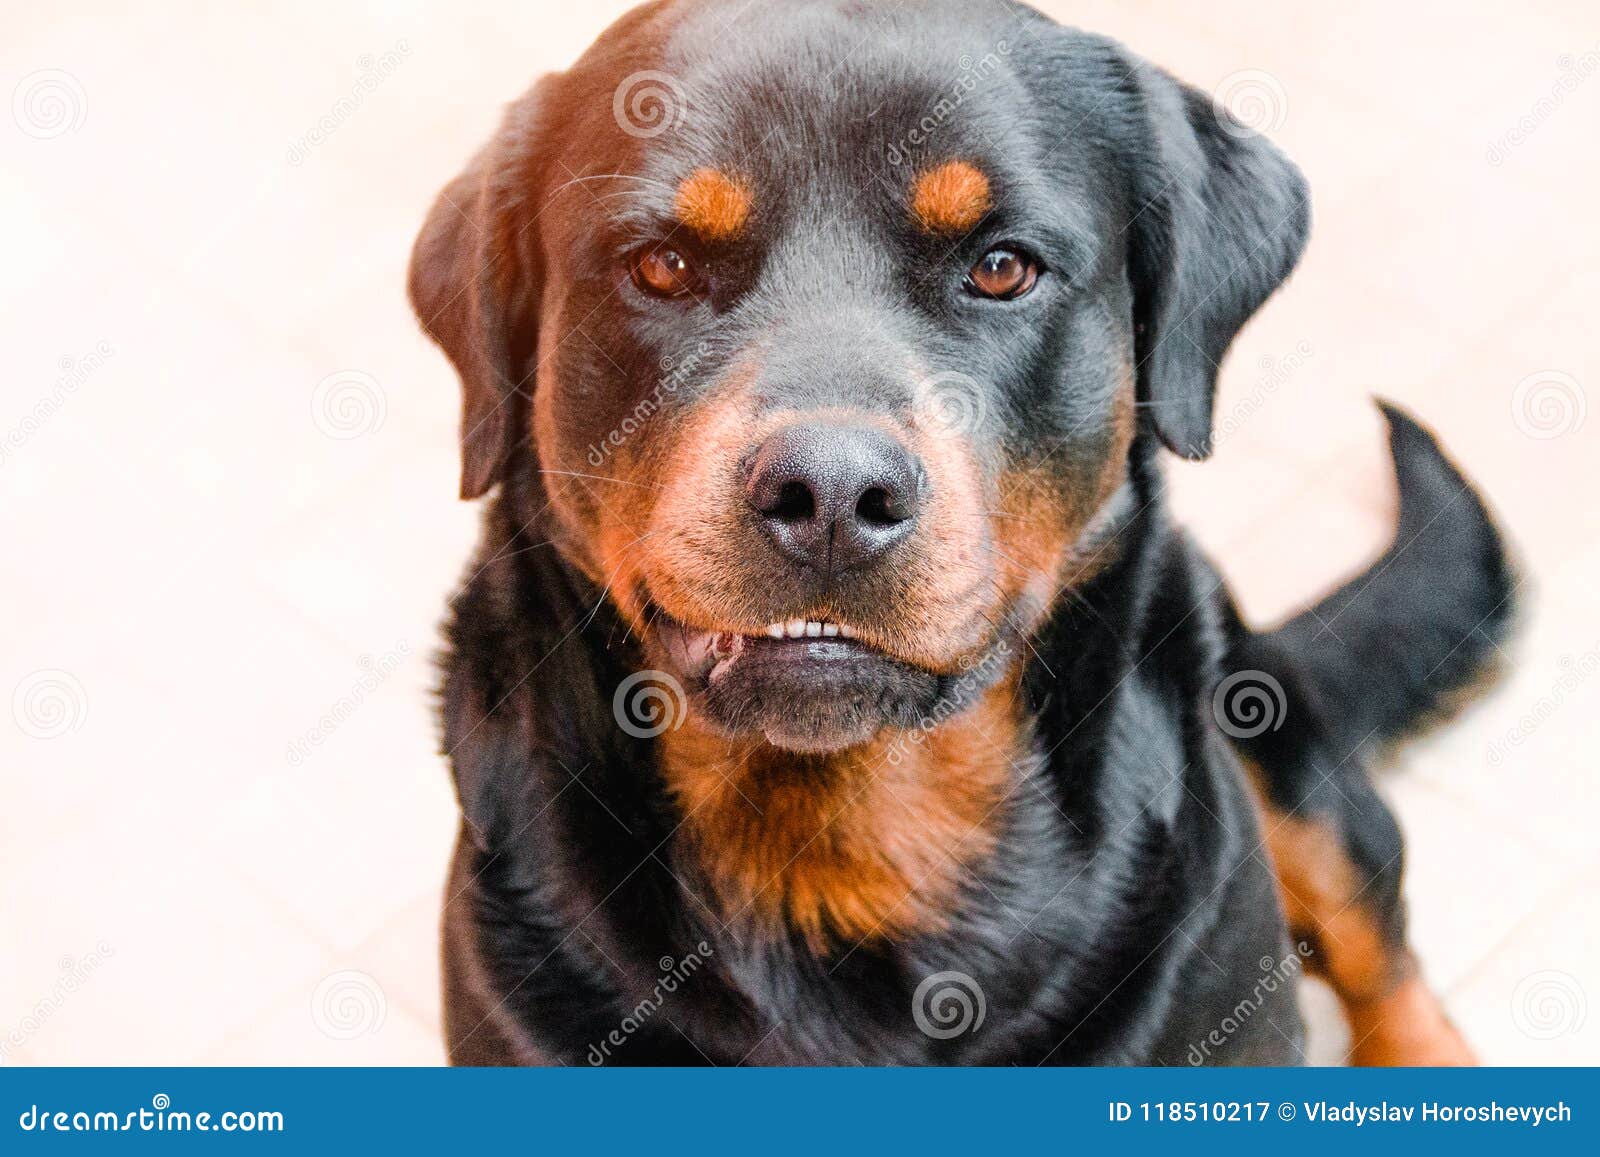 aggressive dog, labrador sunlit, rabies in animals